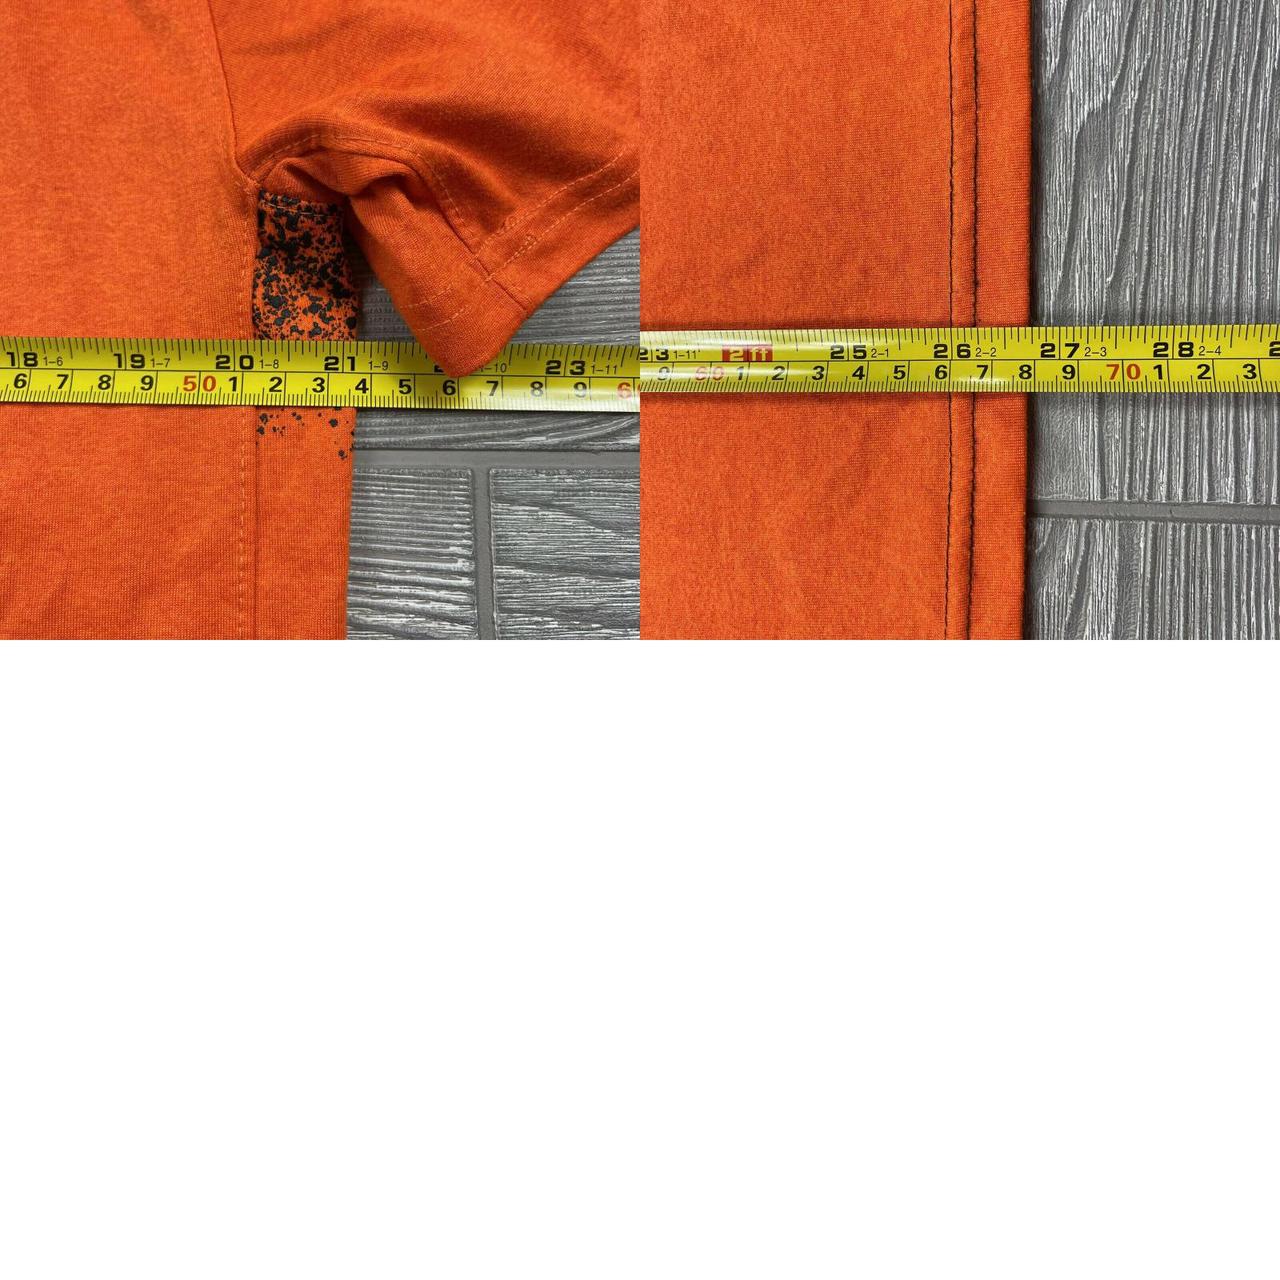 Detroit Tiger Long Sleeve Shirt barely worn  - Depop